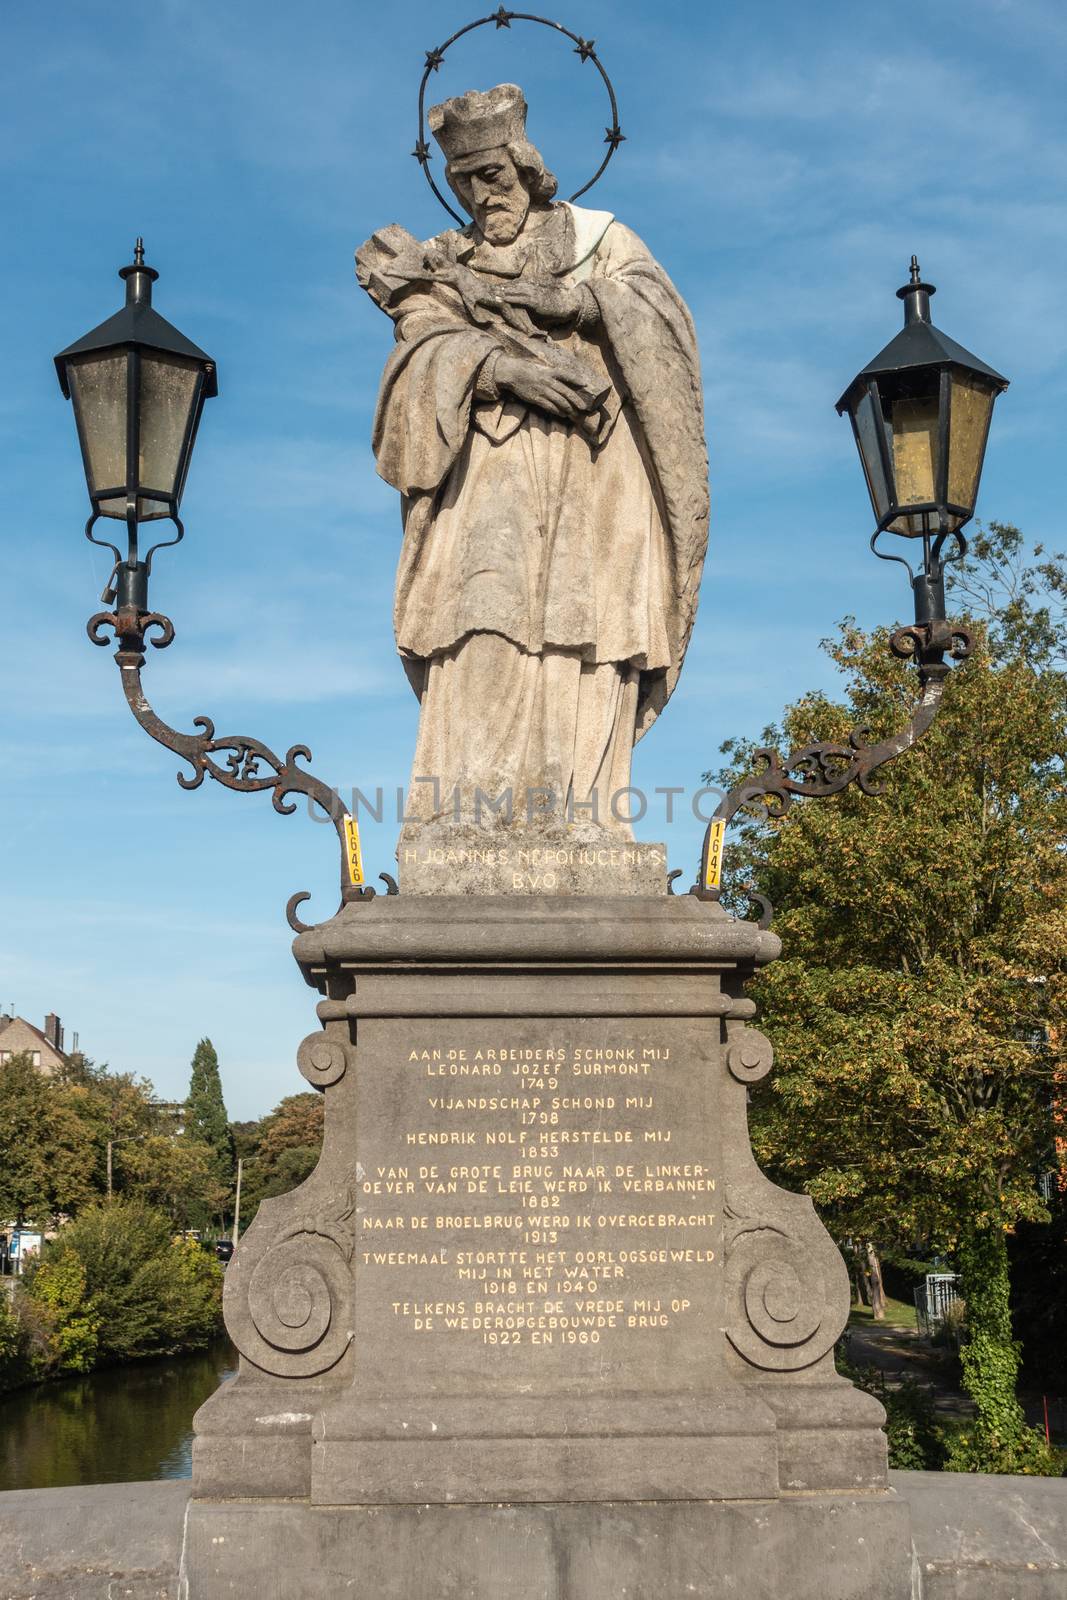 Saint John of Nepomuk statue on Broel Tower, Kortrijk Belgium. by Claudine